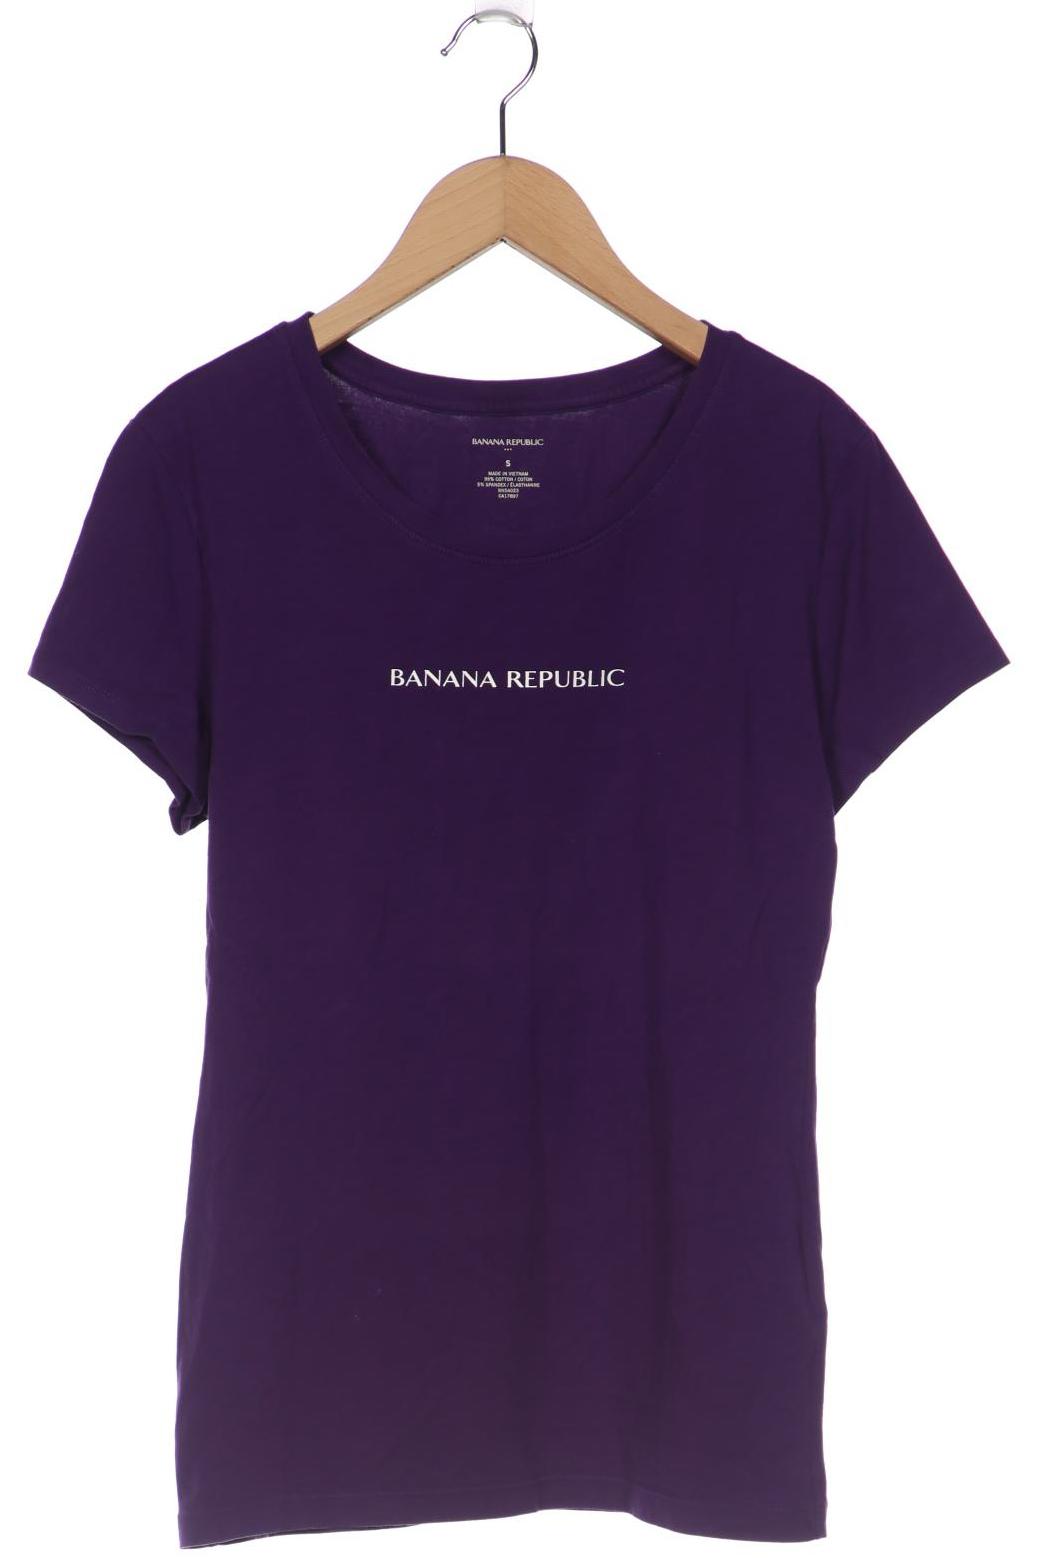 Banana Republic Damen T-Shirt, flieder, Gr. 36 von Banana Republic